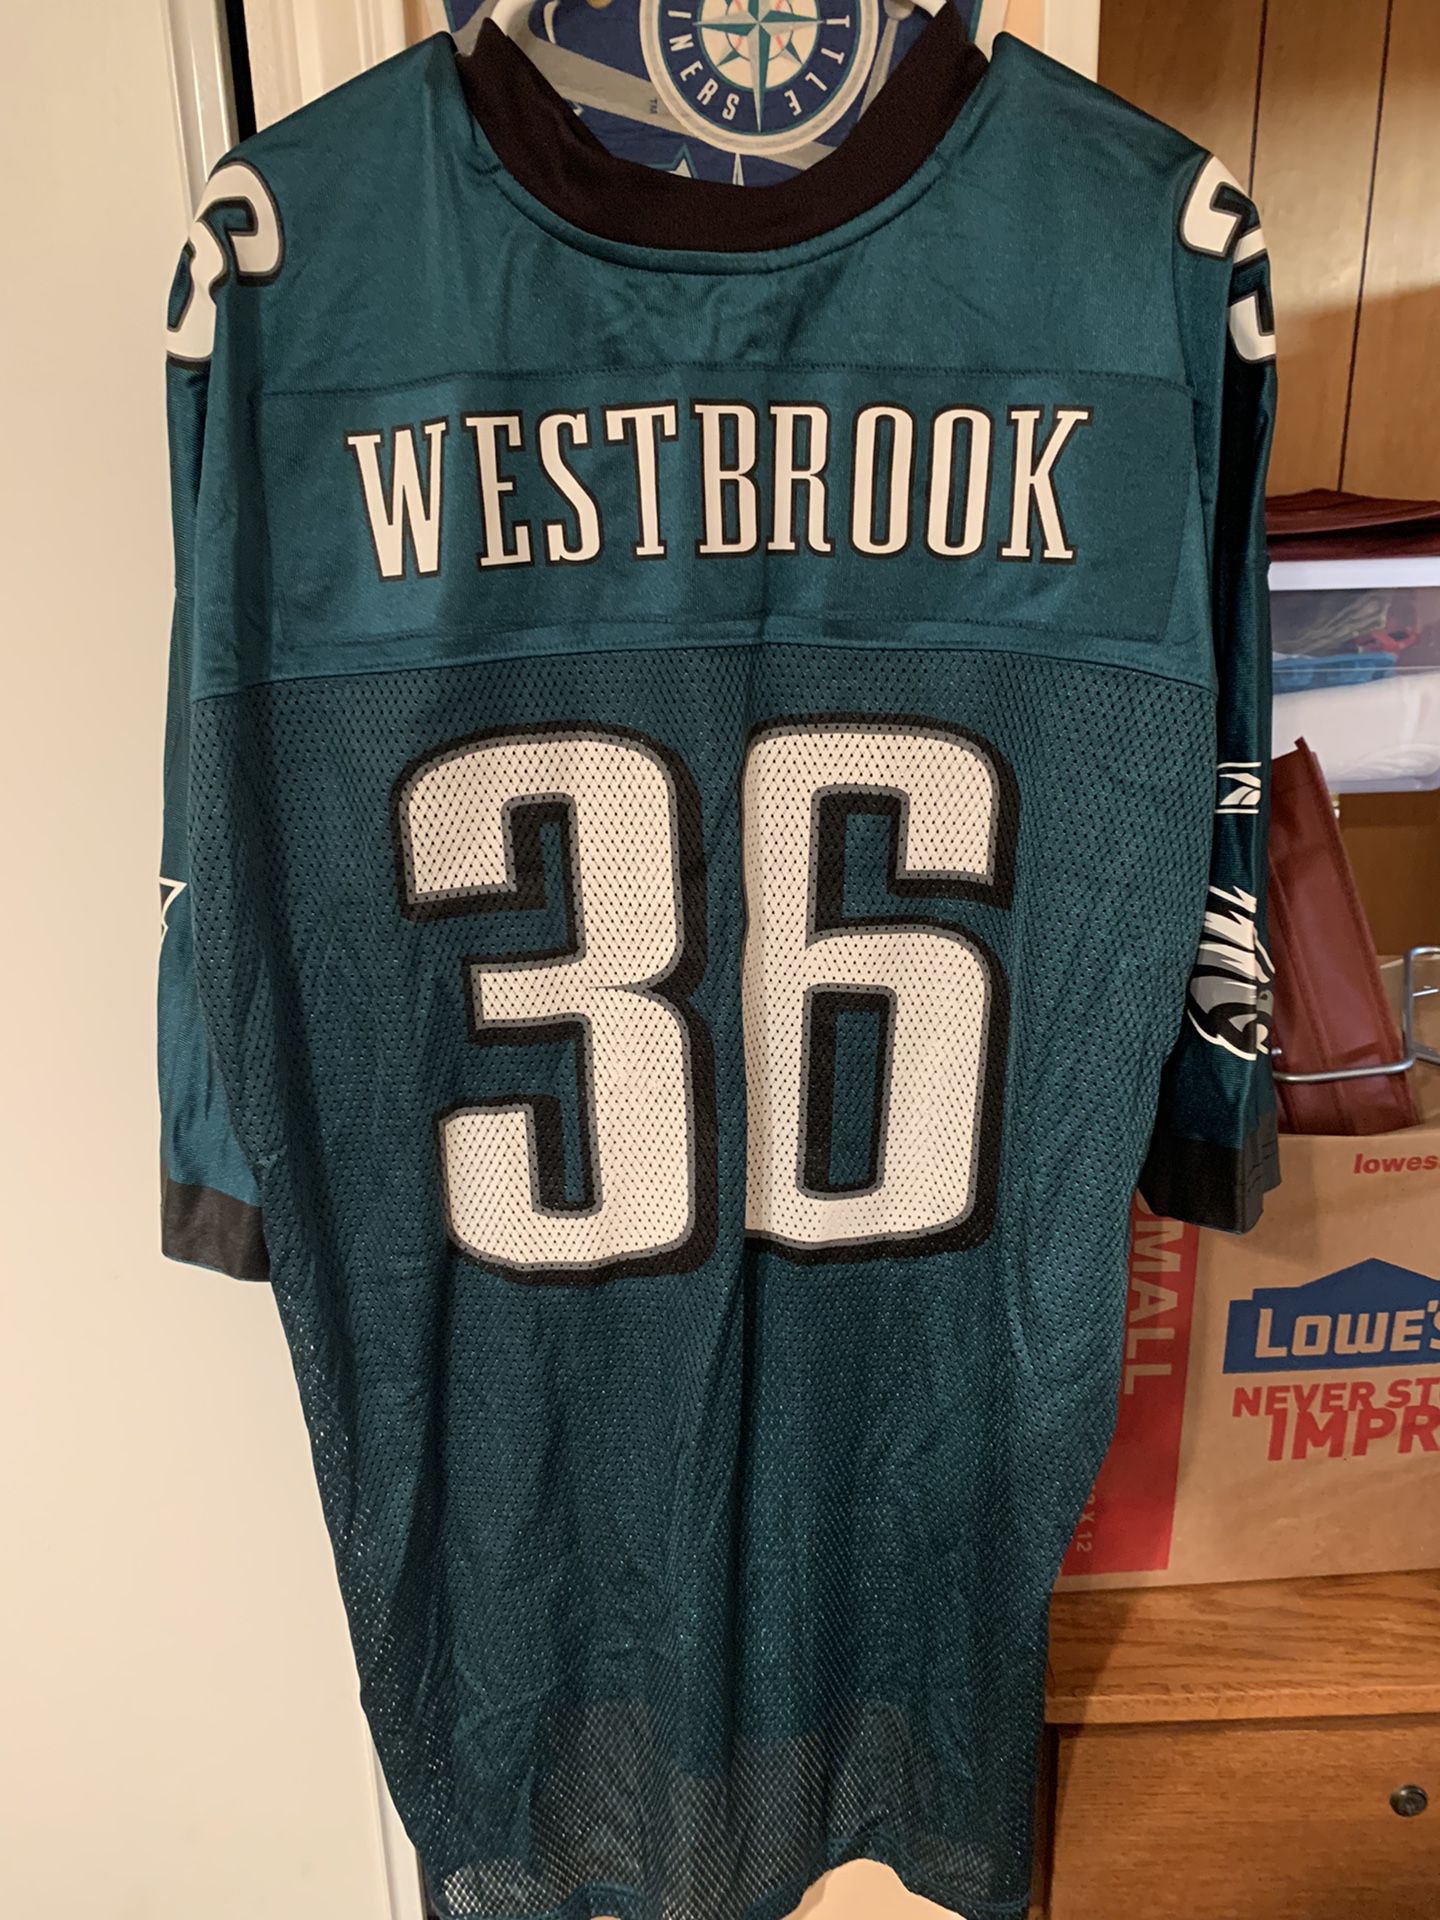 Brian Westbrook #36 Philadelphia Eagles Reebok Onfield Mens Jersey Size 2XL NWOT